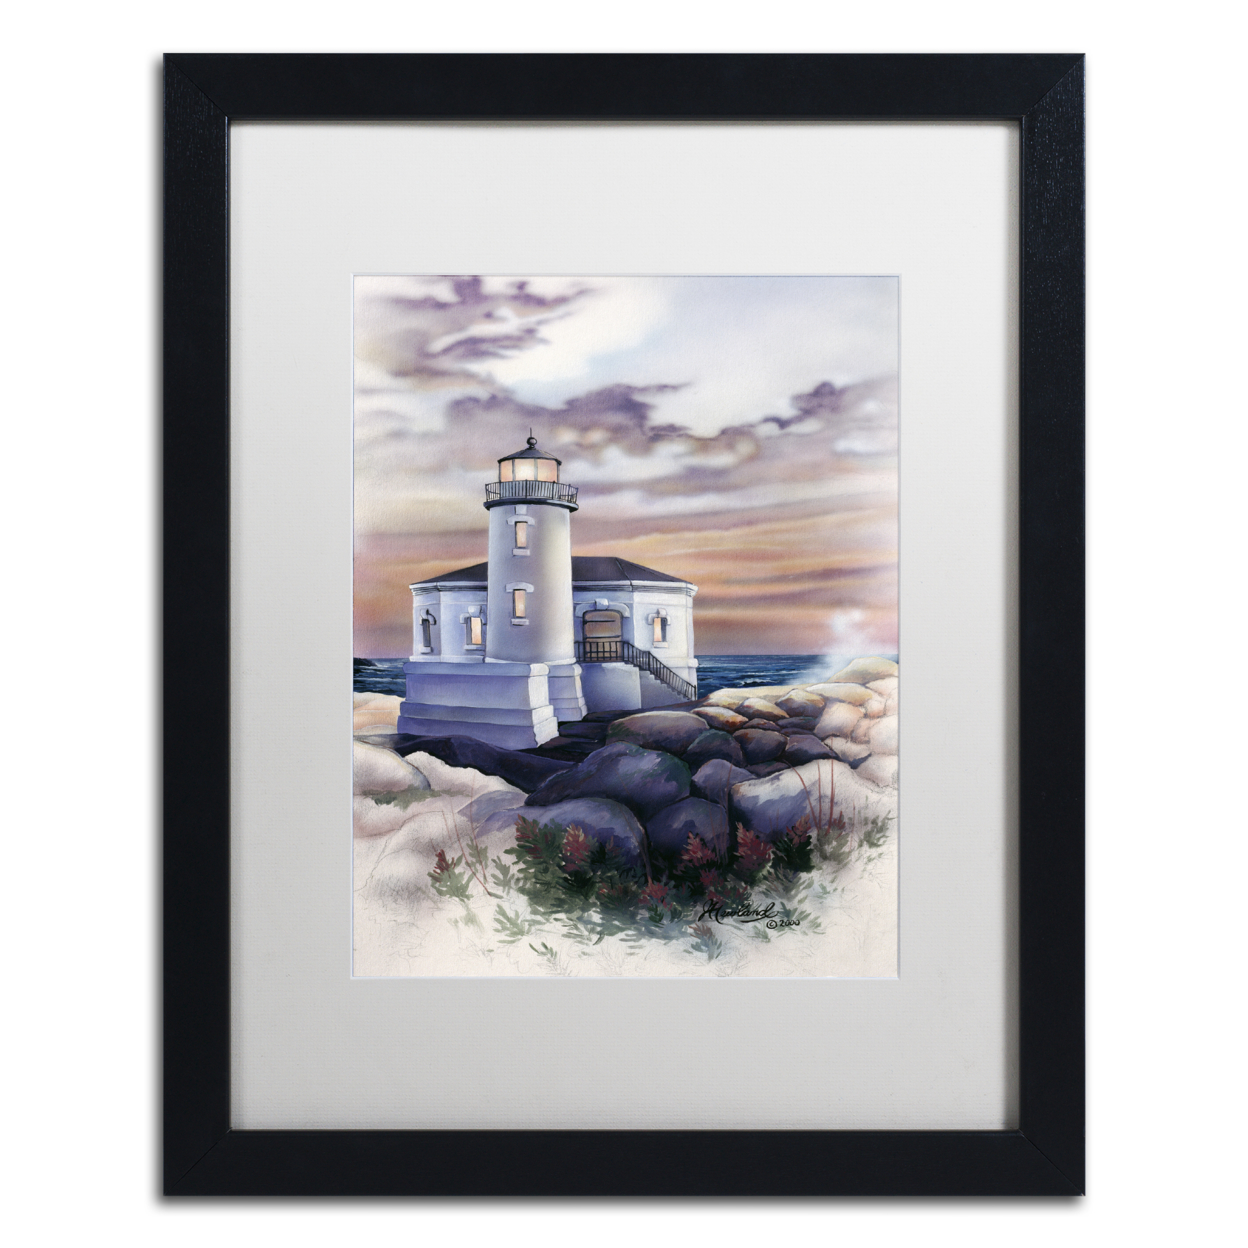 Jenny Newland 'Lighthouse' Black Wooden Framed Art 18 X 22 Inches